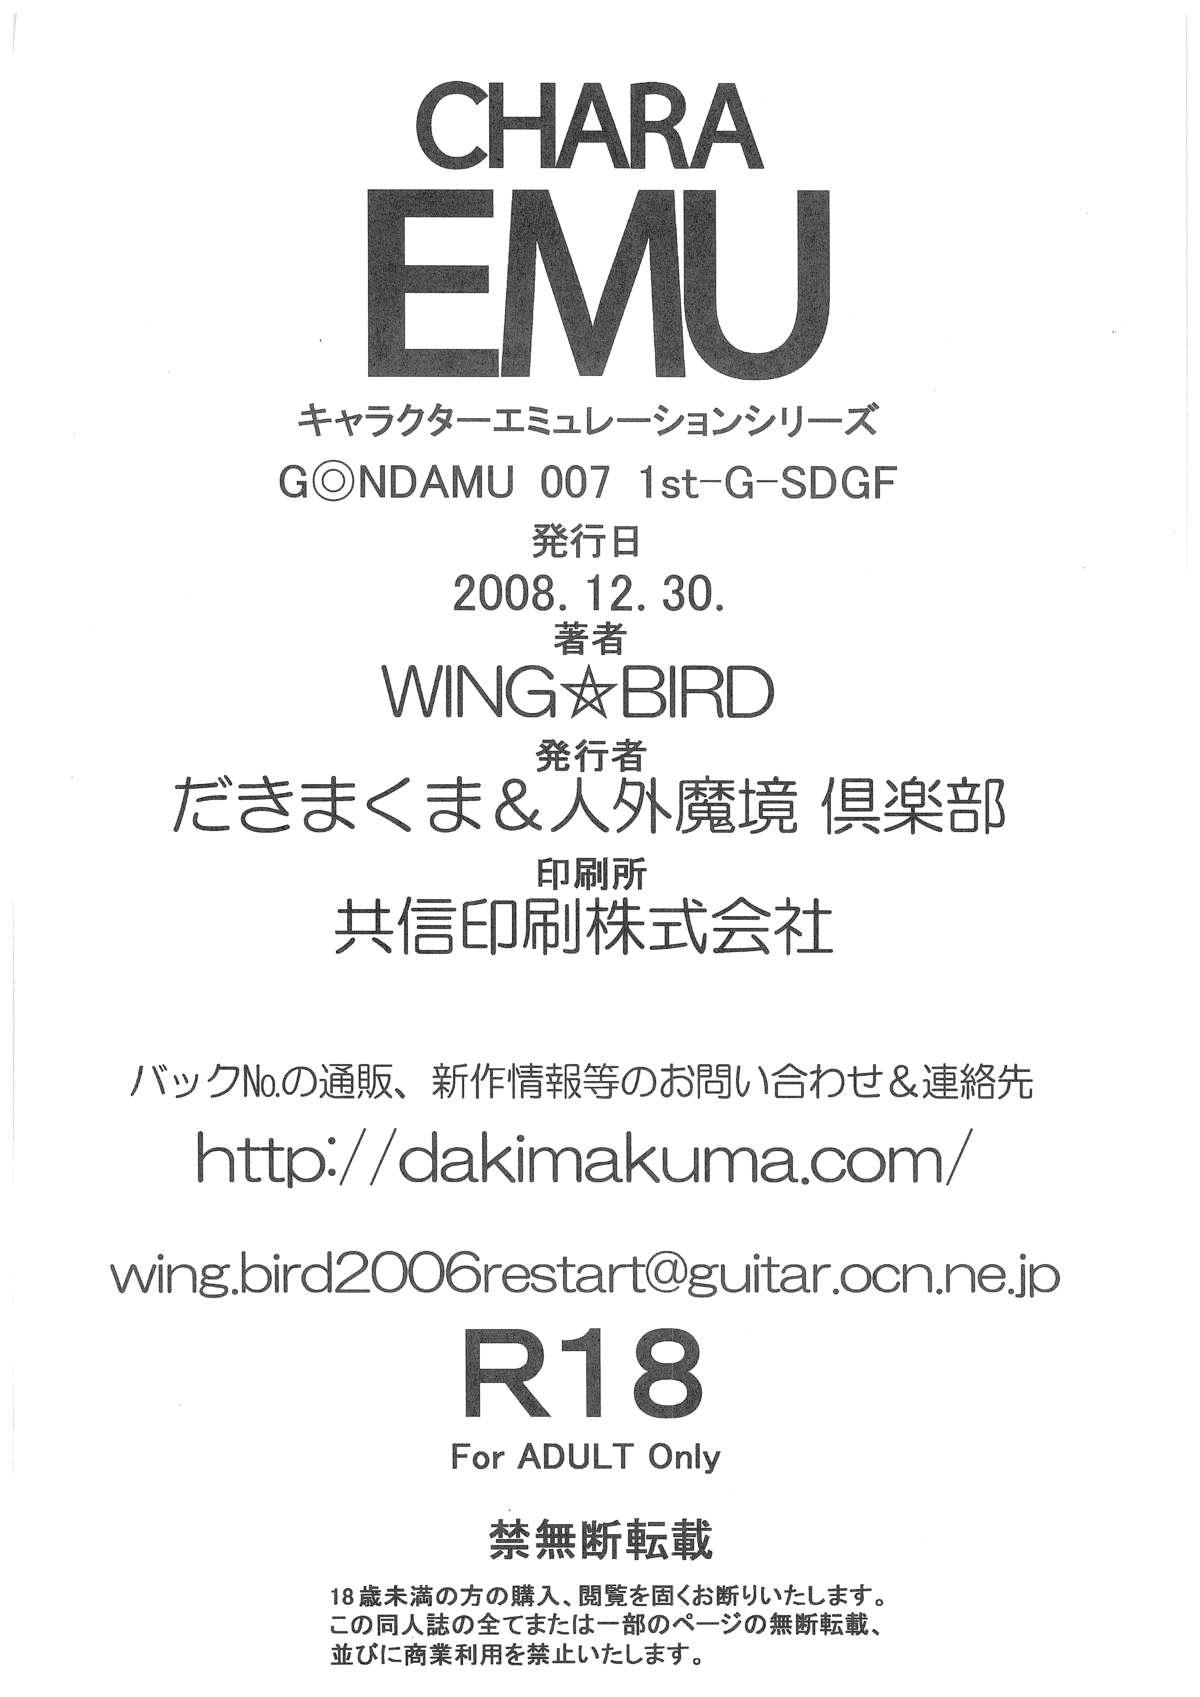 [Dakimakuma, Jingai Makyou Club (WING☆BIRD)] CHARA EMU W☆B009 GONDAM 1st-G-SDGF (Various) 28